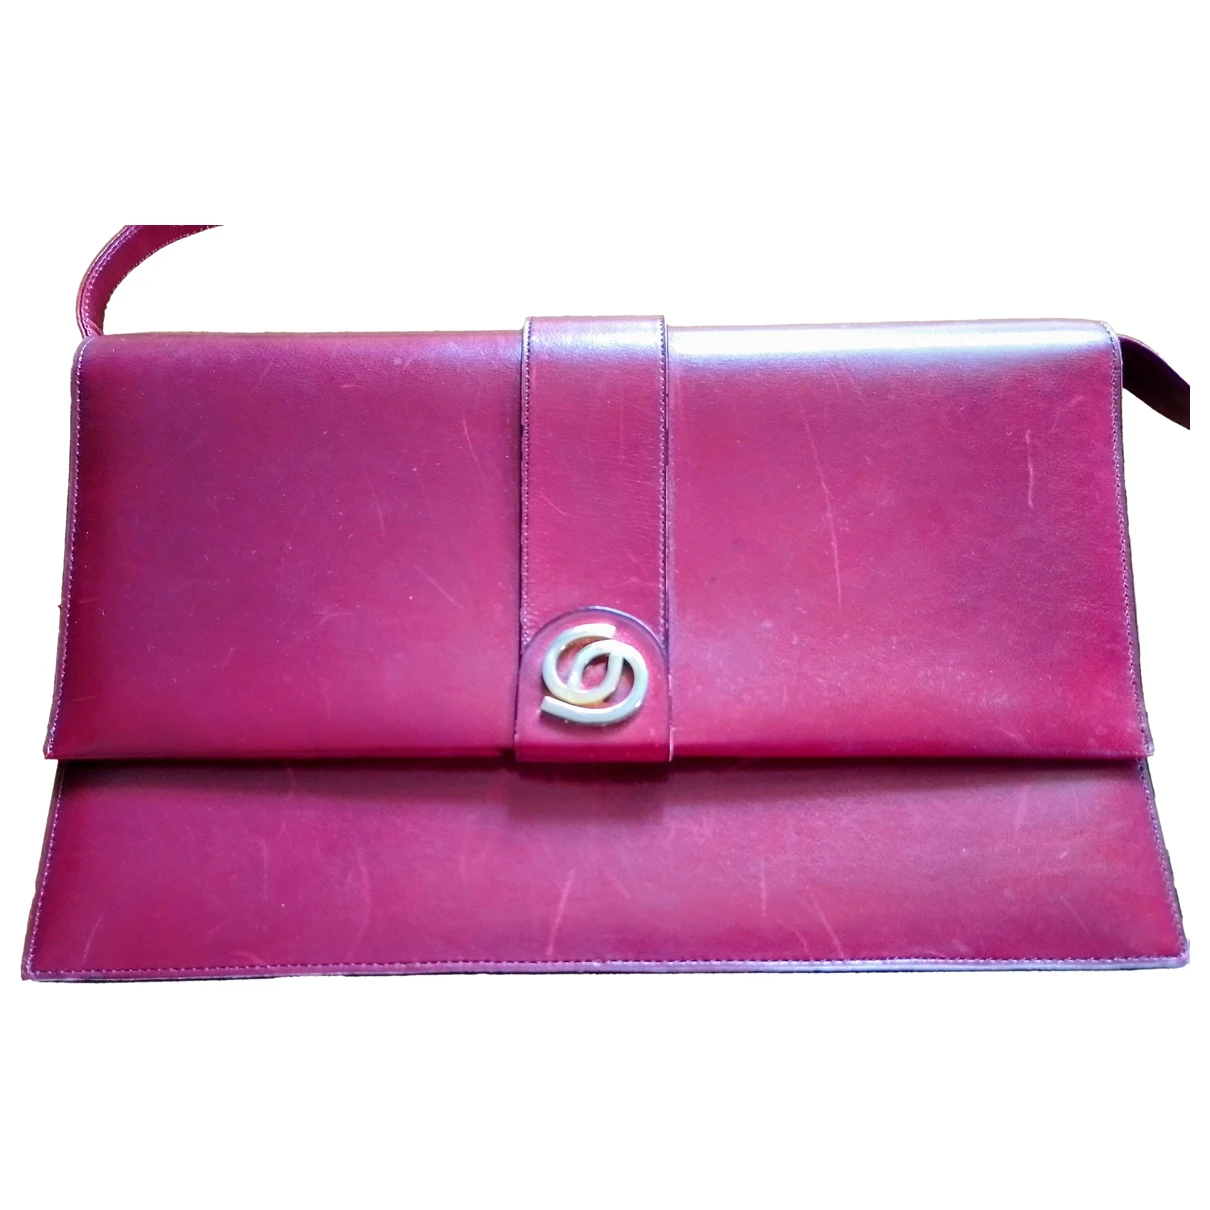 Pre-owned Dior Leather Handbag In Burgundy